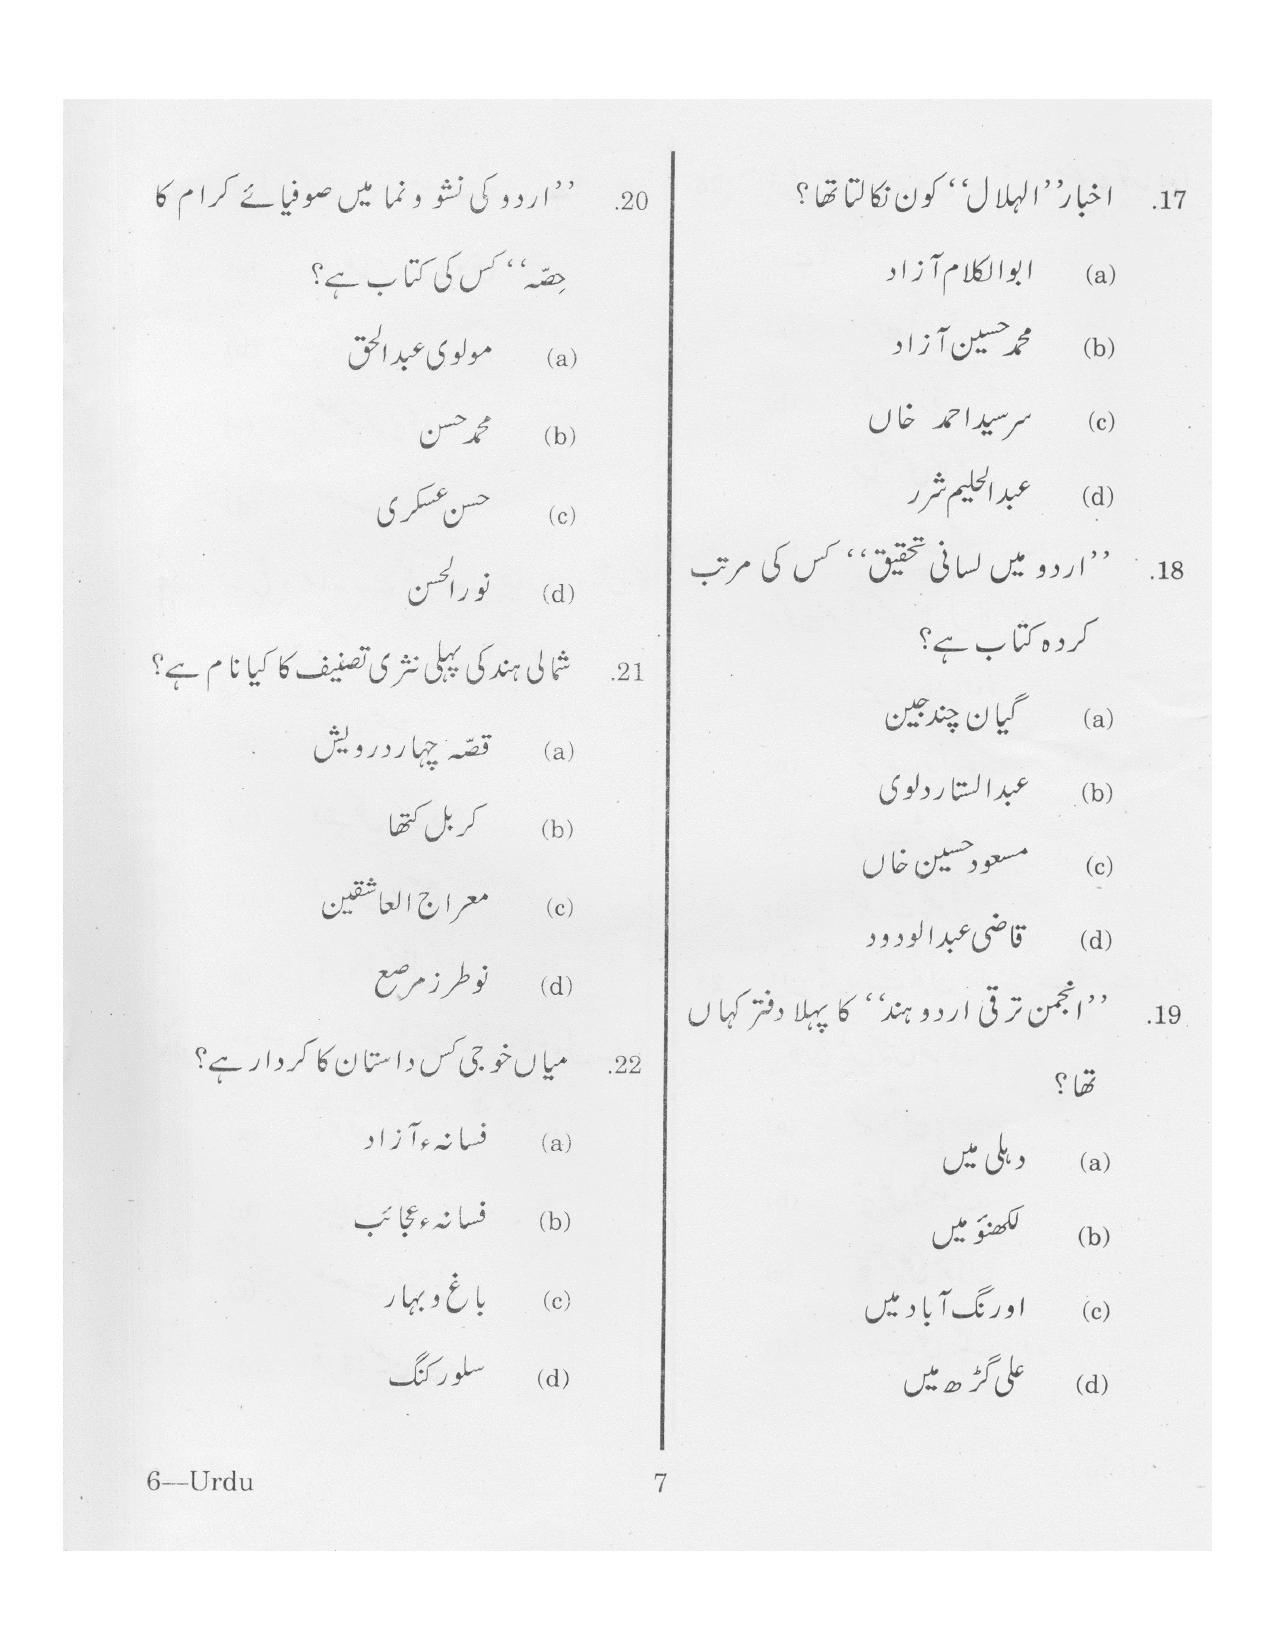 URATPG Urdu 2013 Question Paper - Page 6